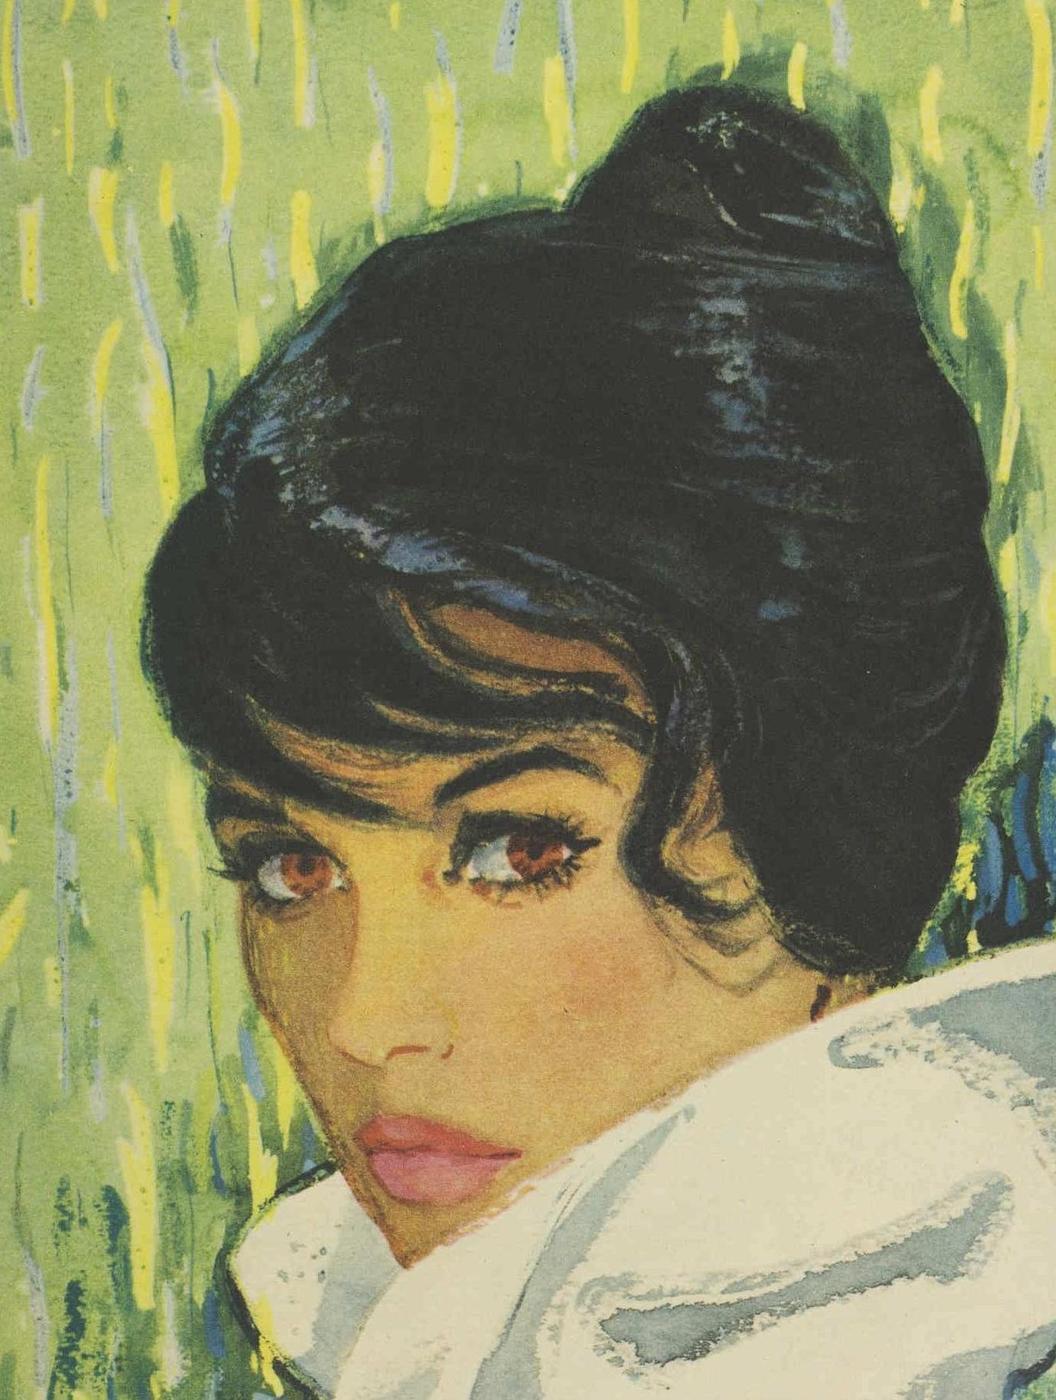 mid-centurylove:
â€œA gorgeous 1960s illustration by John Mills
â€